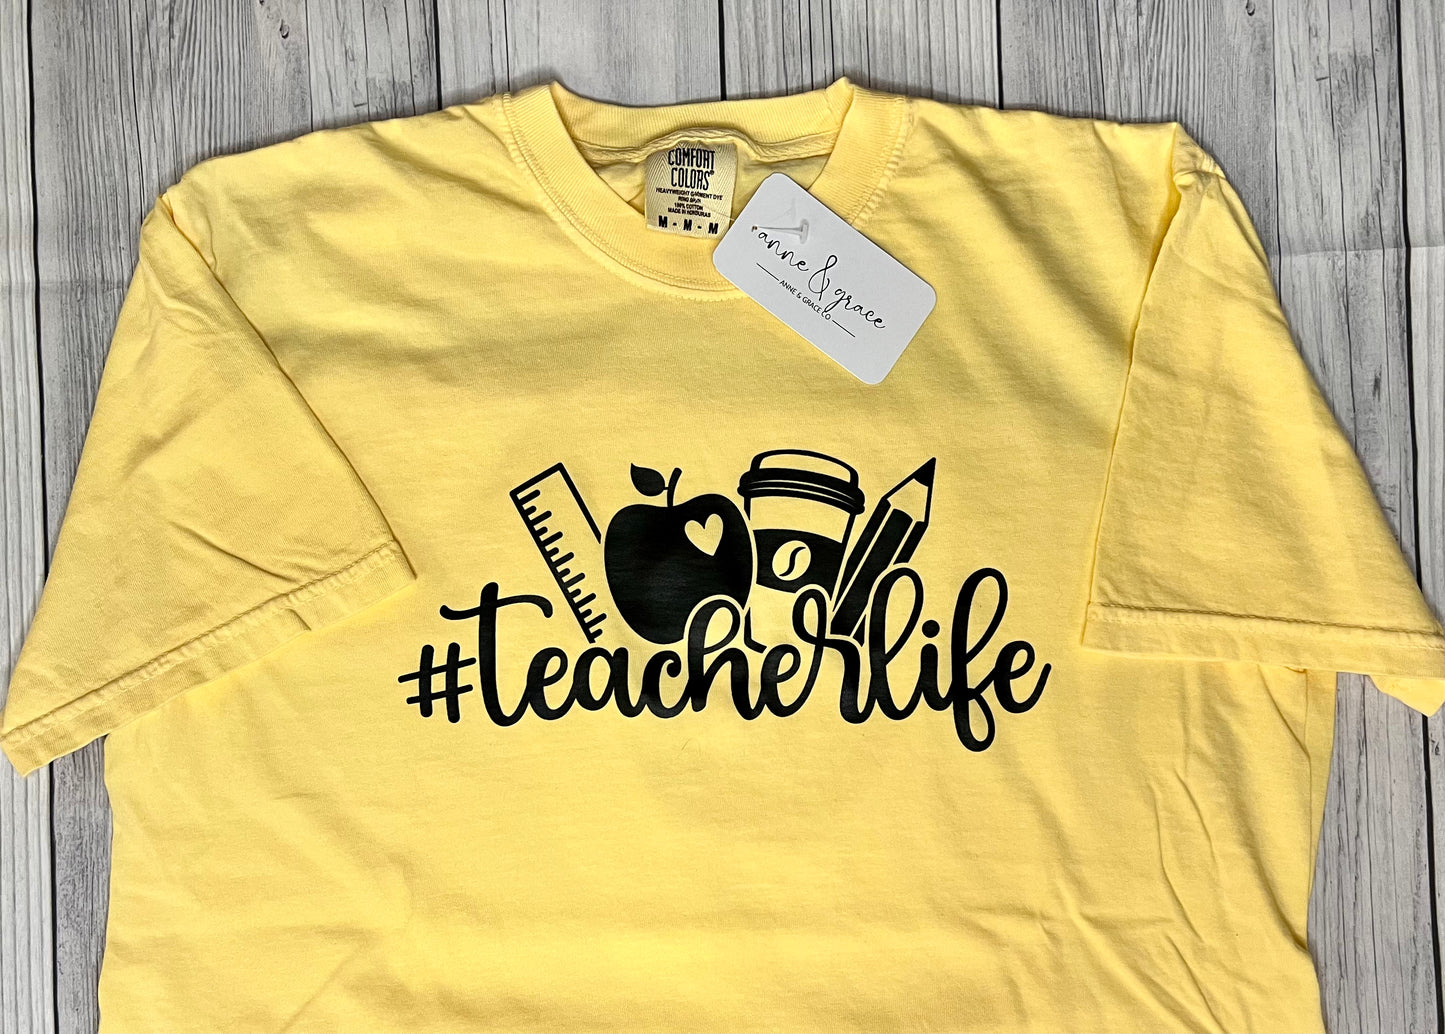 Teacher Life tee on Custom Colors brand t shirt